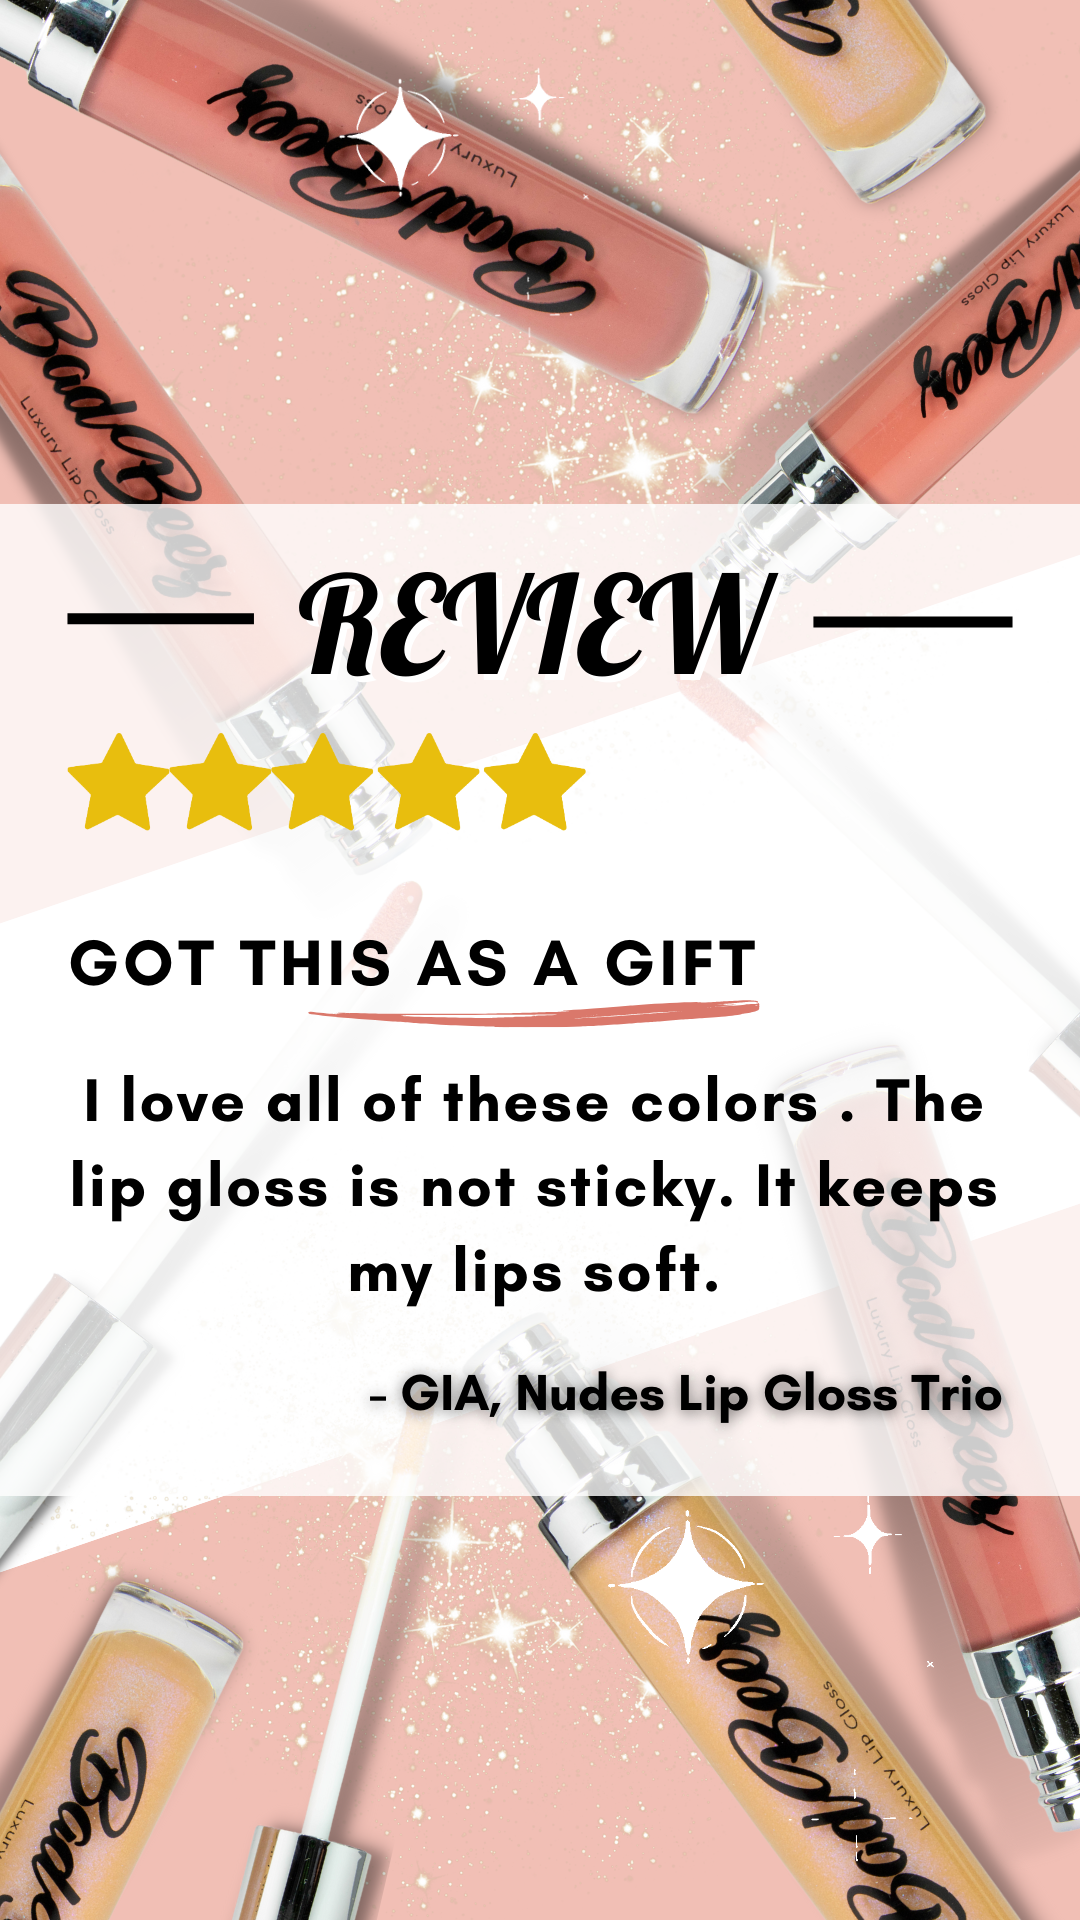 Nudes Luxury Lip Gloss Trio